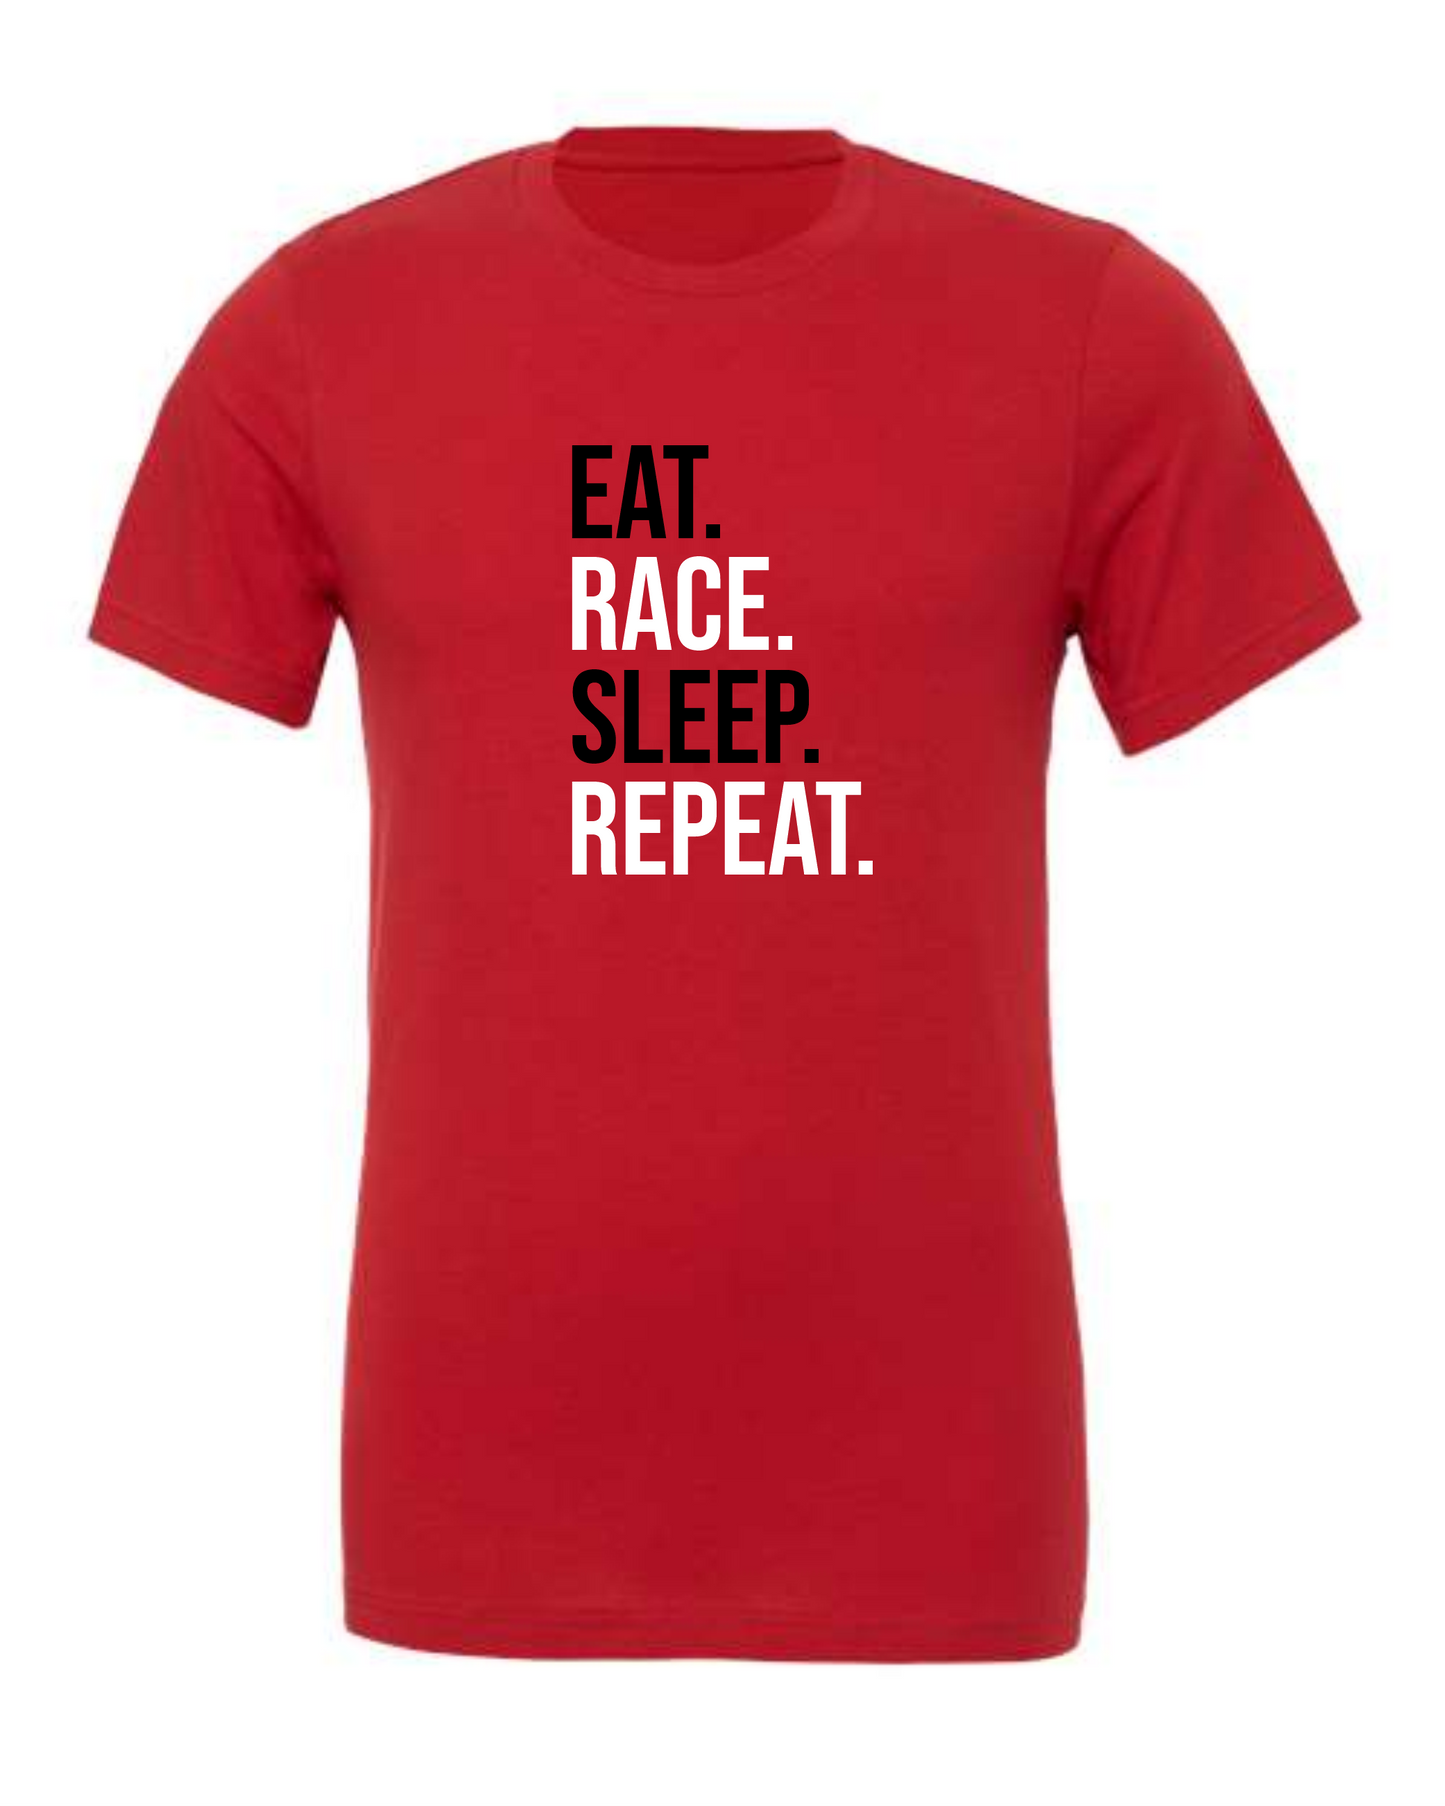 EAT. RACE. SLEEP. REPEAT.